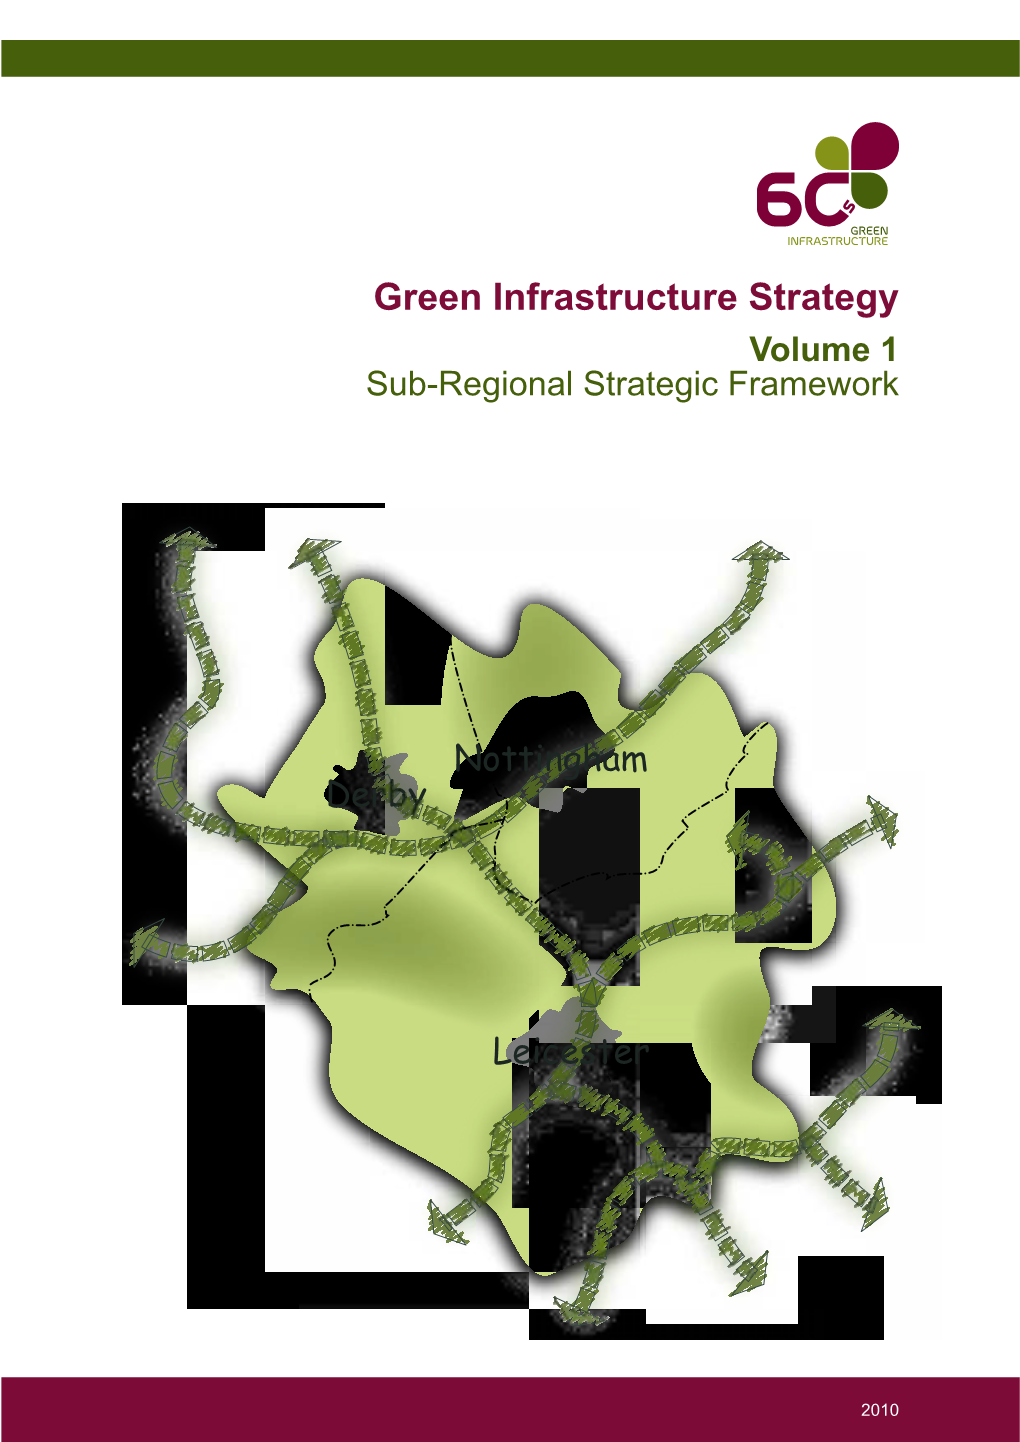 Green Infrastructure Strategy Volume 1 Sub-Regional Strategic Framework